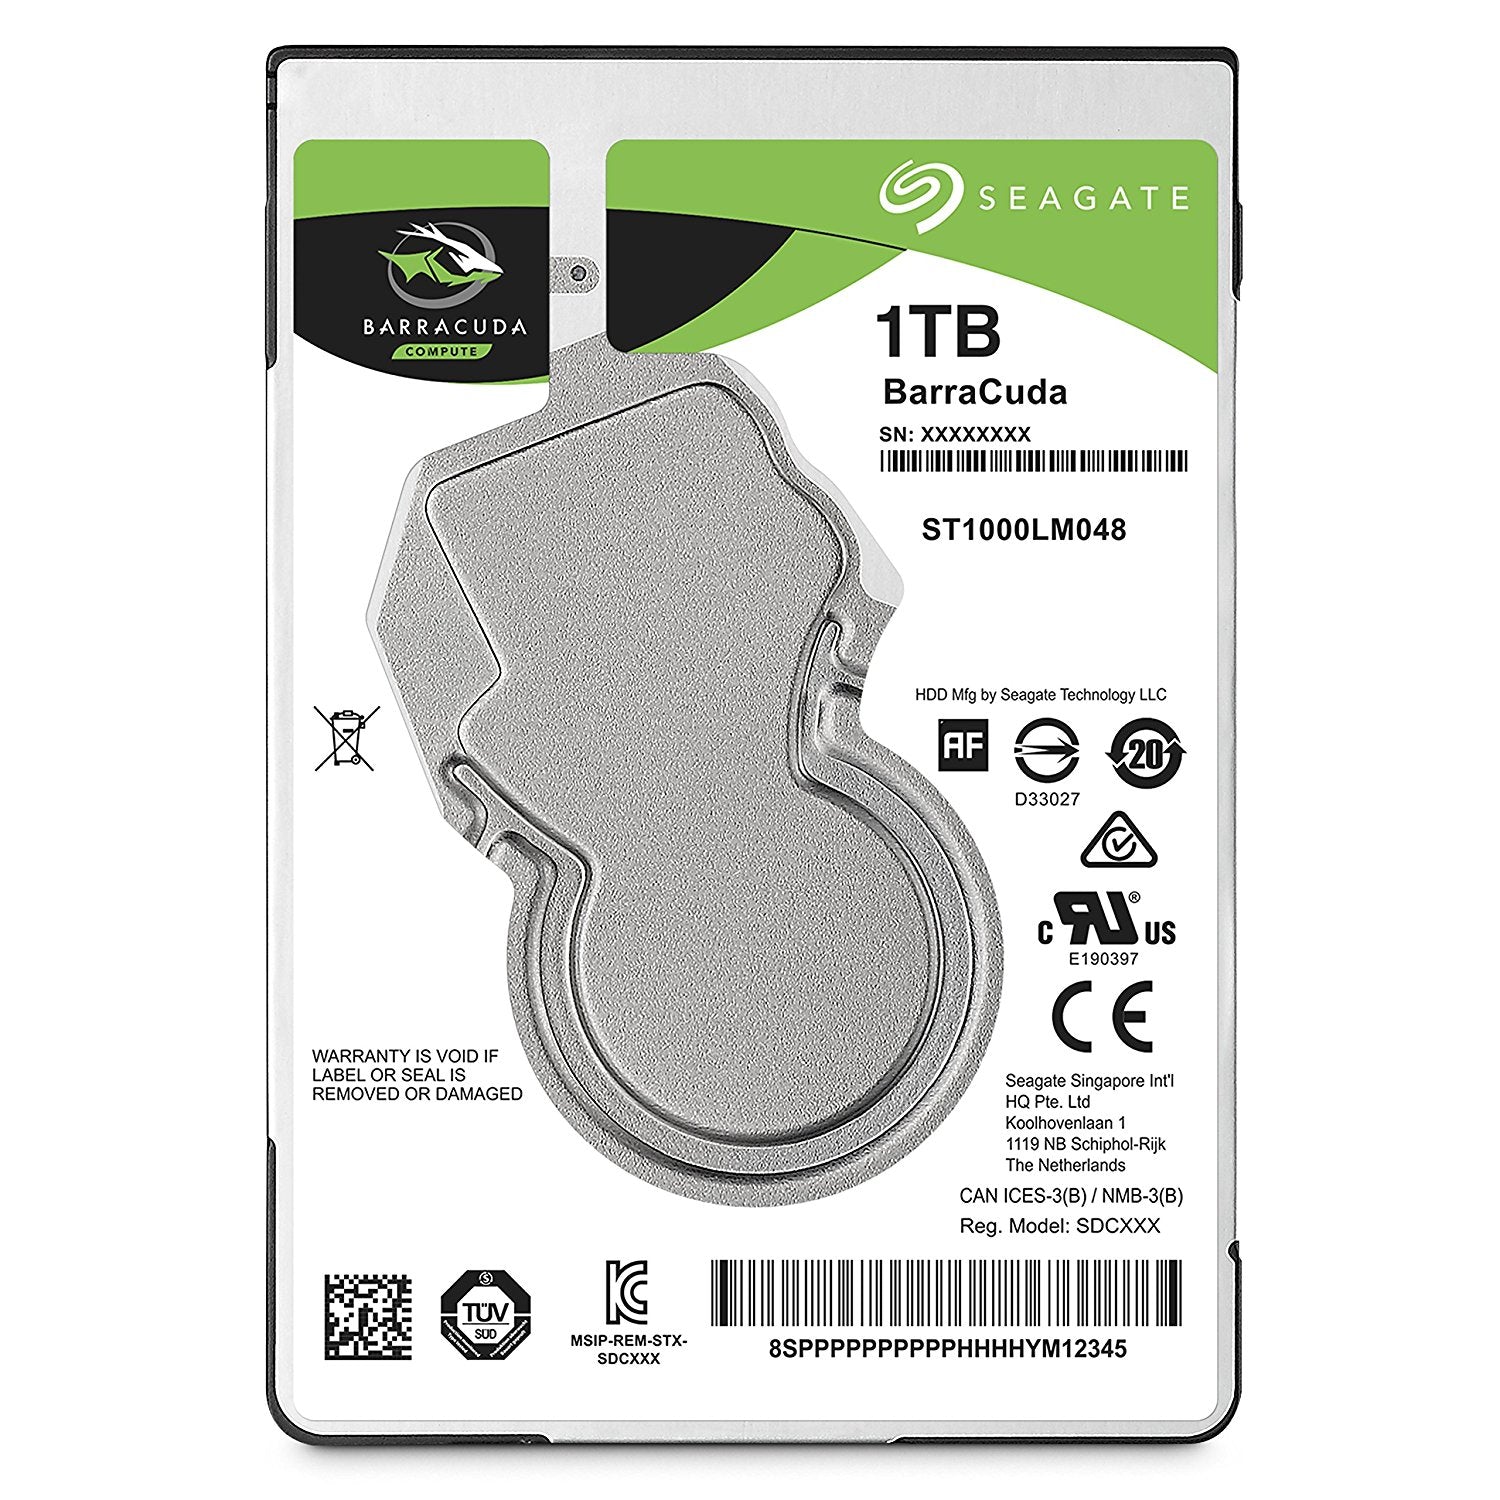 Seagate BARRACUDA 1 TB Laptop Internal Hard Disk Drive (ST1000LM048)